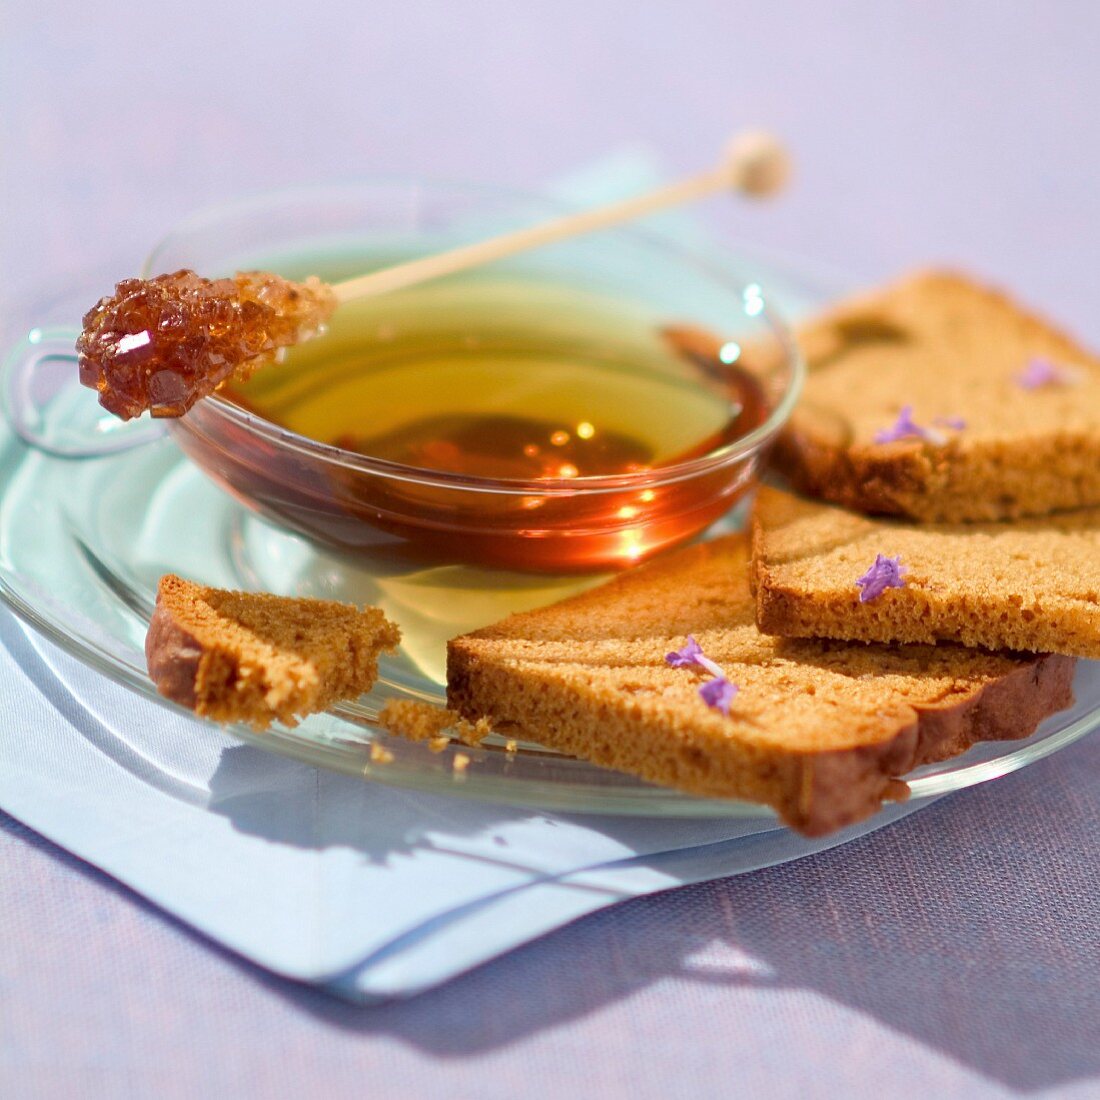 Tea and honey bread (topic: Provence)